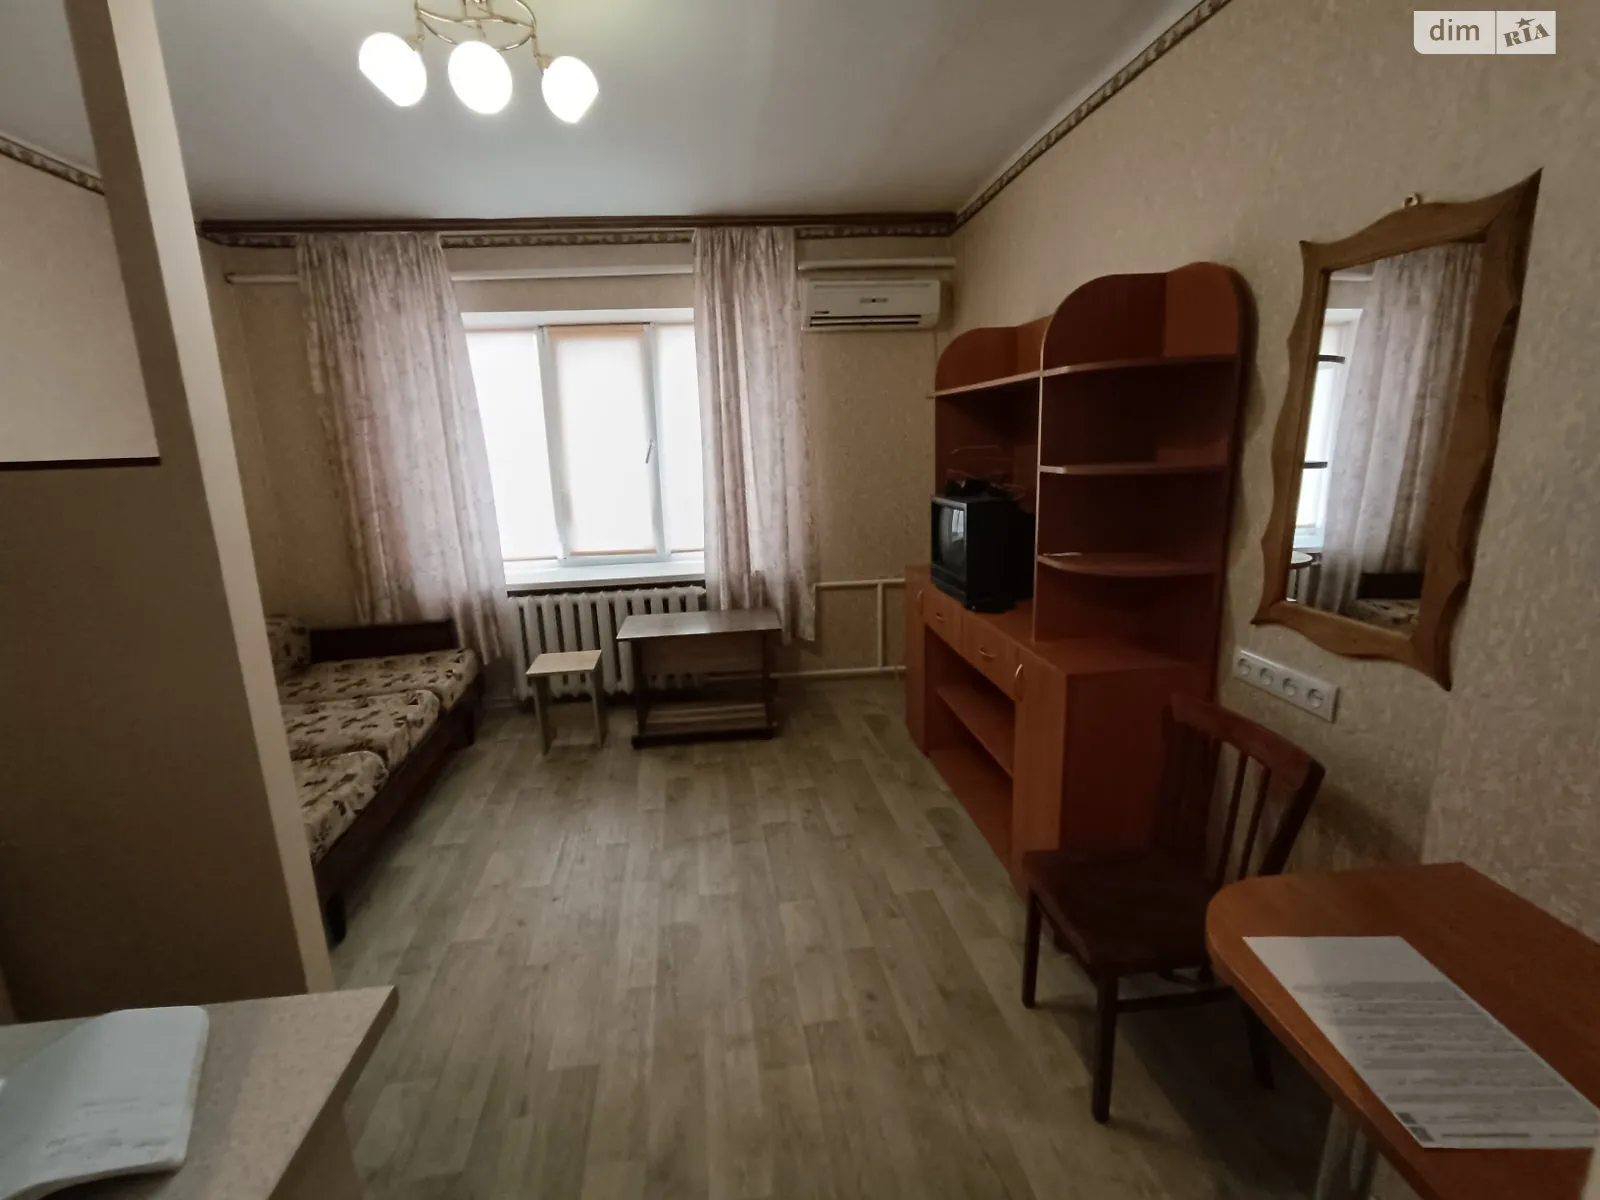 Продается комната 18 кв. м в Николаеве - фото 2